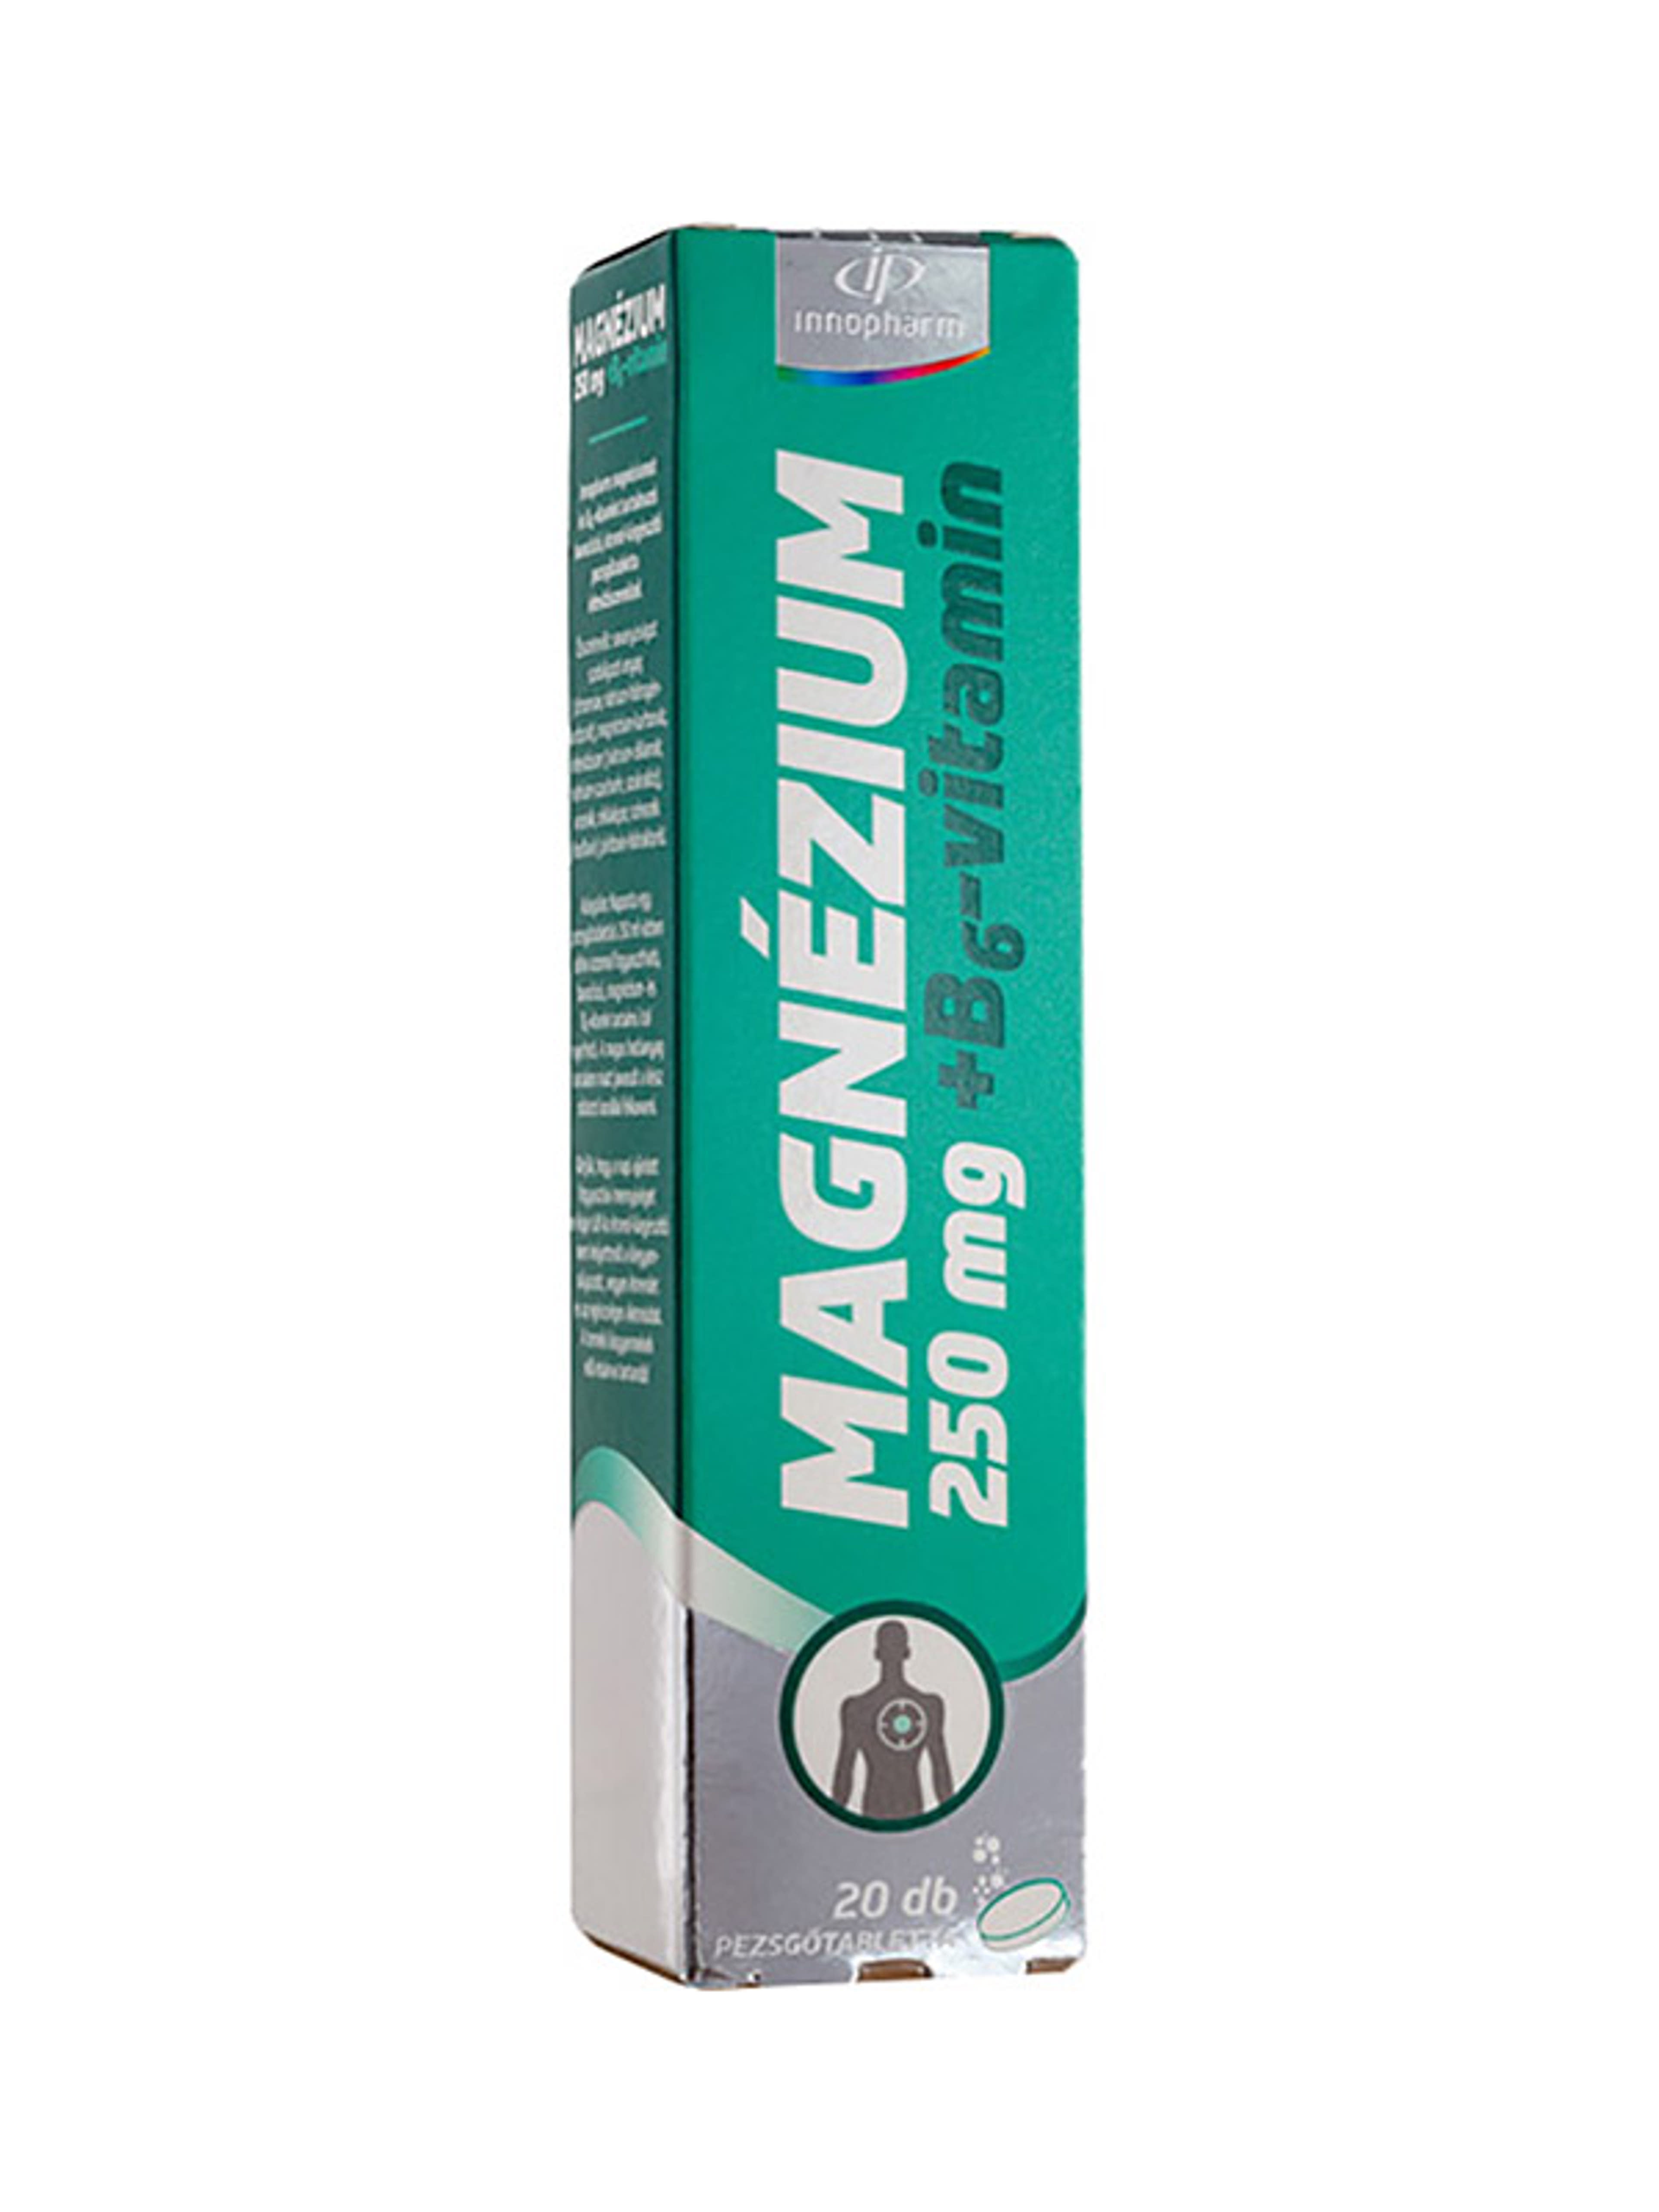 Innopharm Magnesium 250mg+ B6 Pezsgotabletta - 20 db-1